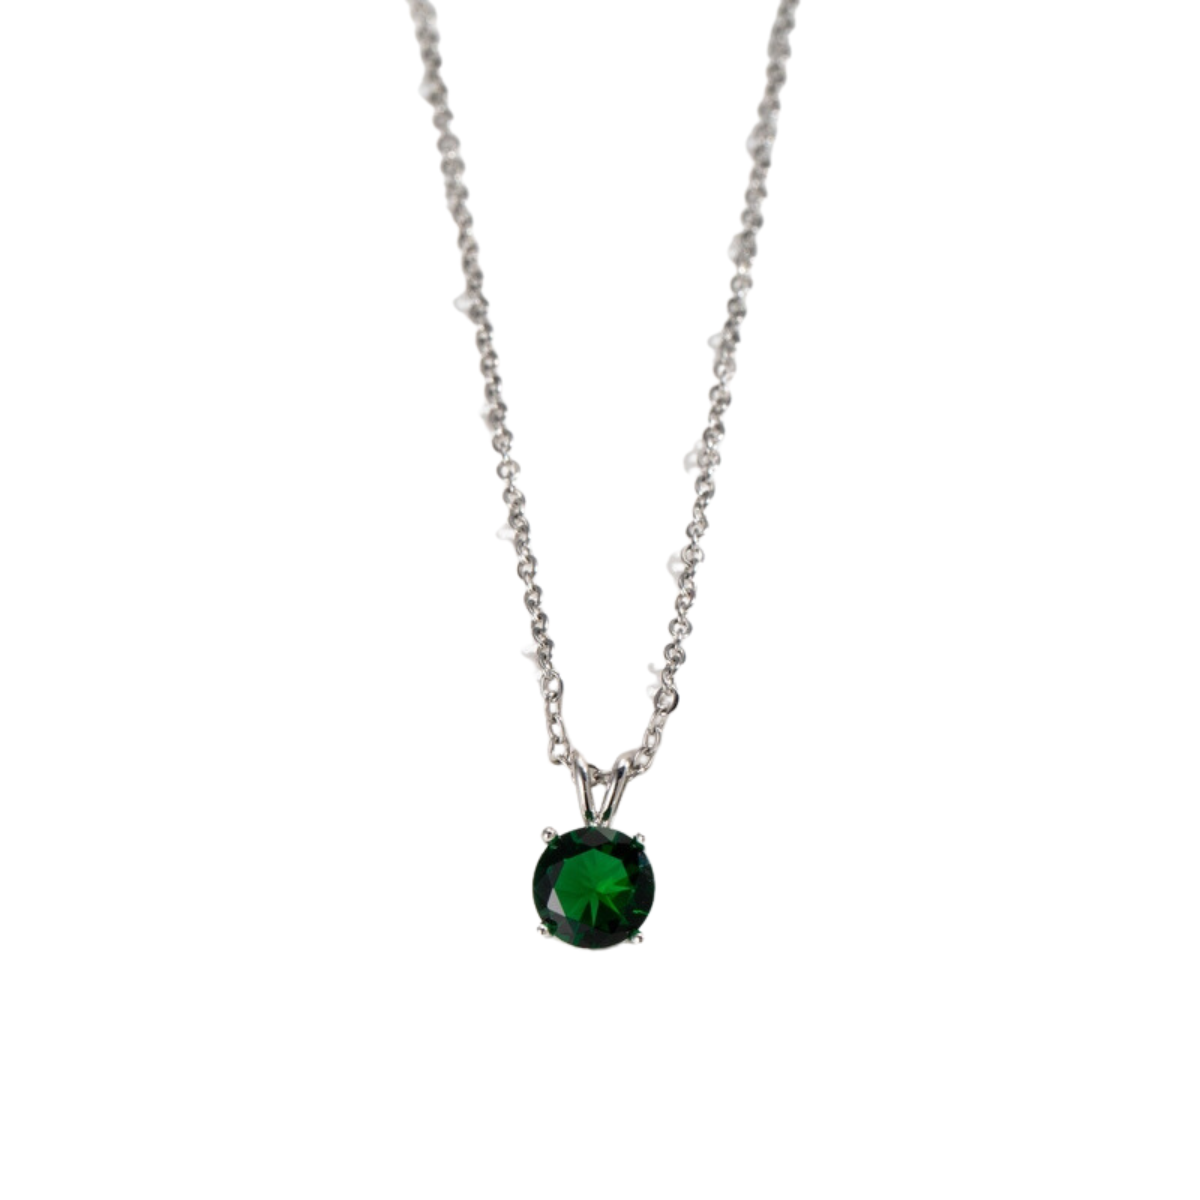 10pcs - Silver Chain Green Emerald Round Crystal Pendant Necklace|GCJ429|UK seller